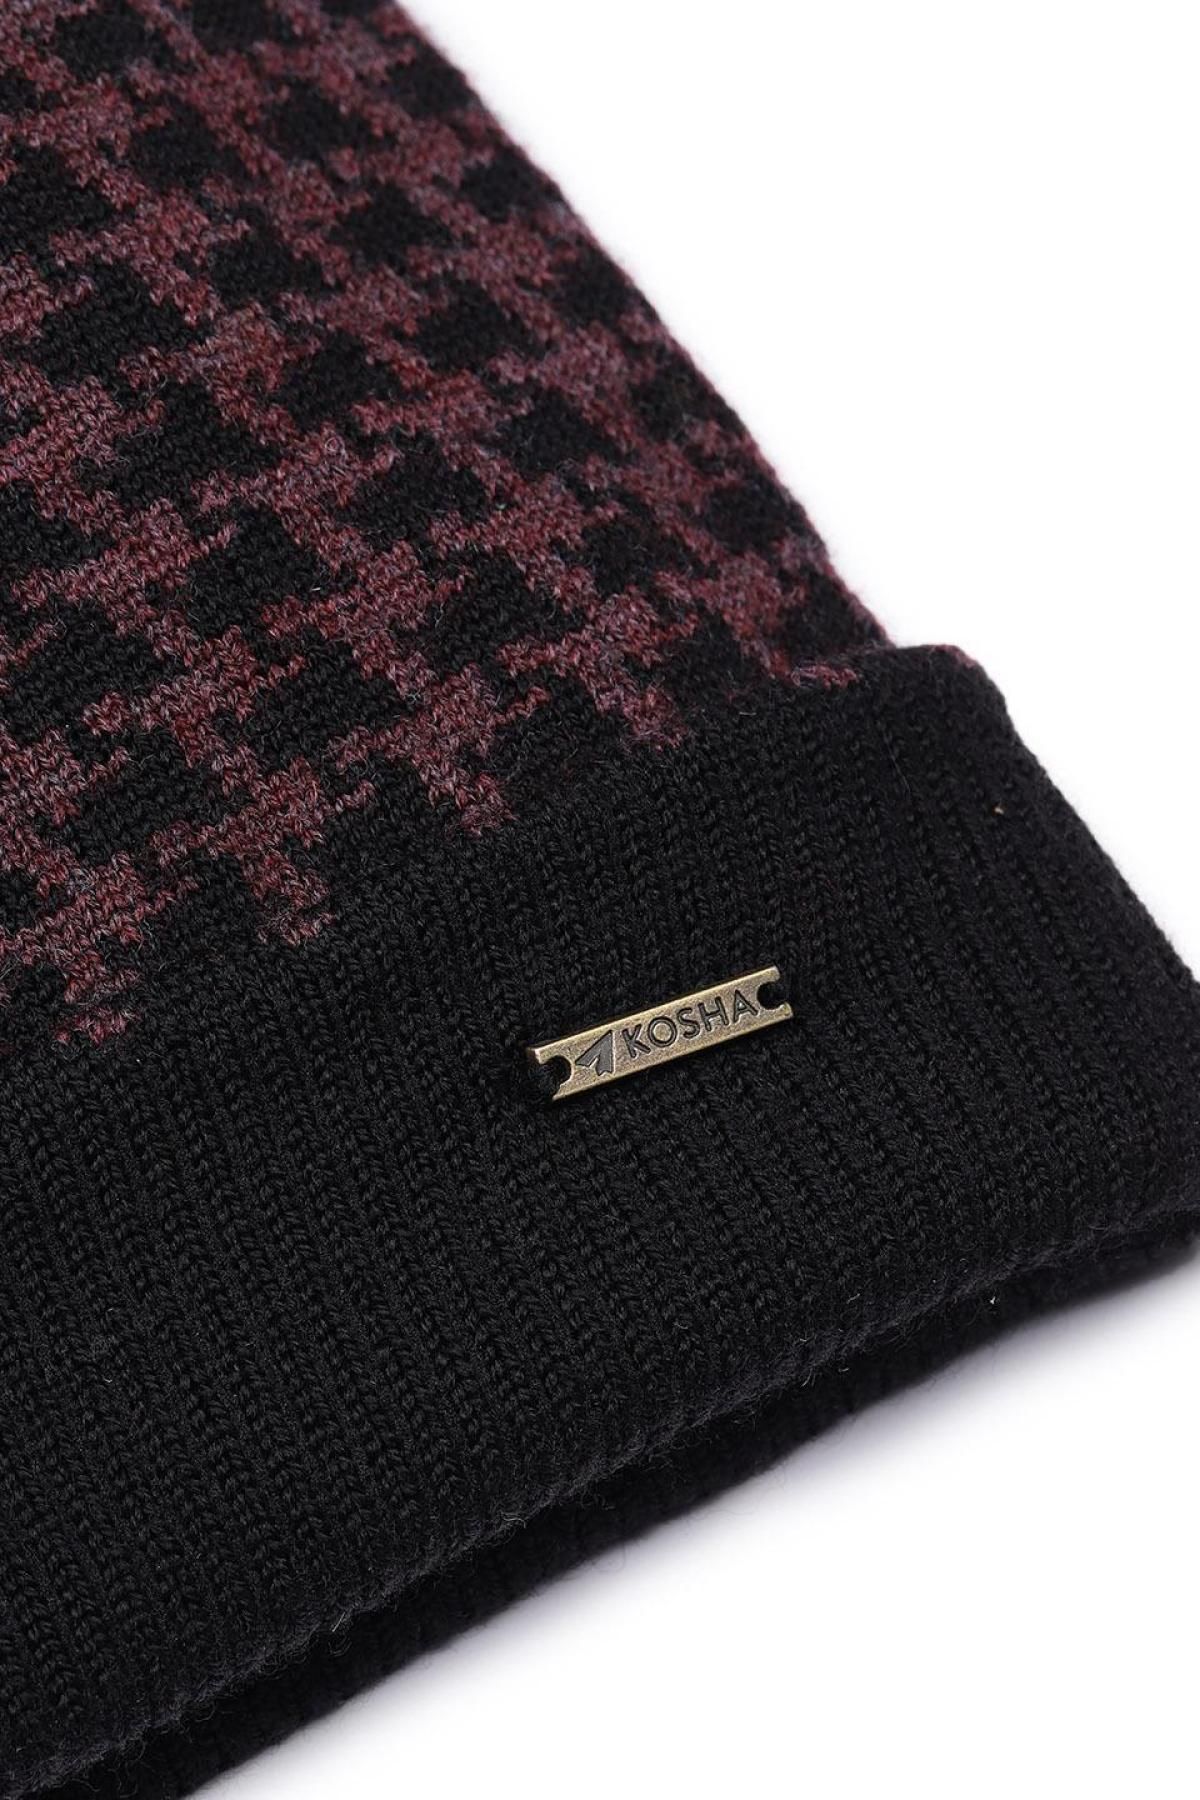 Purple-Black Merino Wool Reversible Pattern Beanie| Unisex